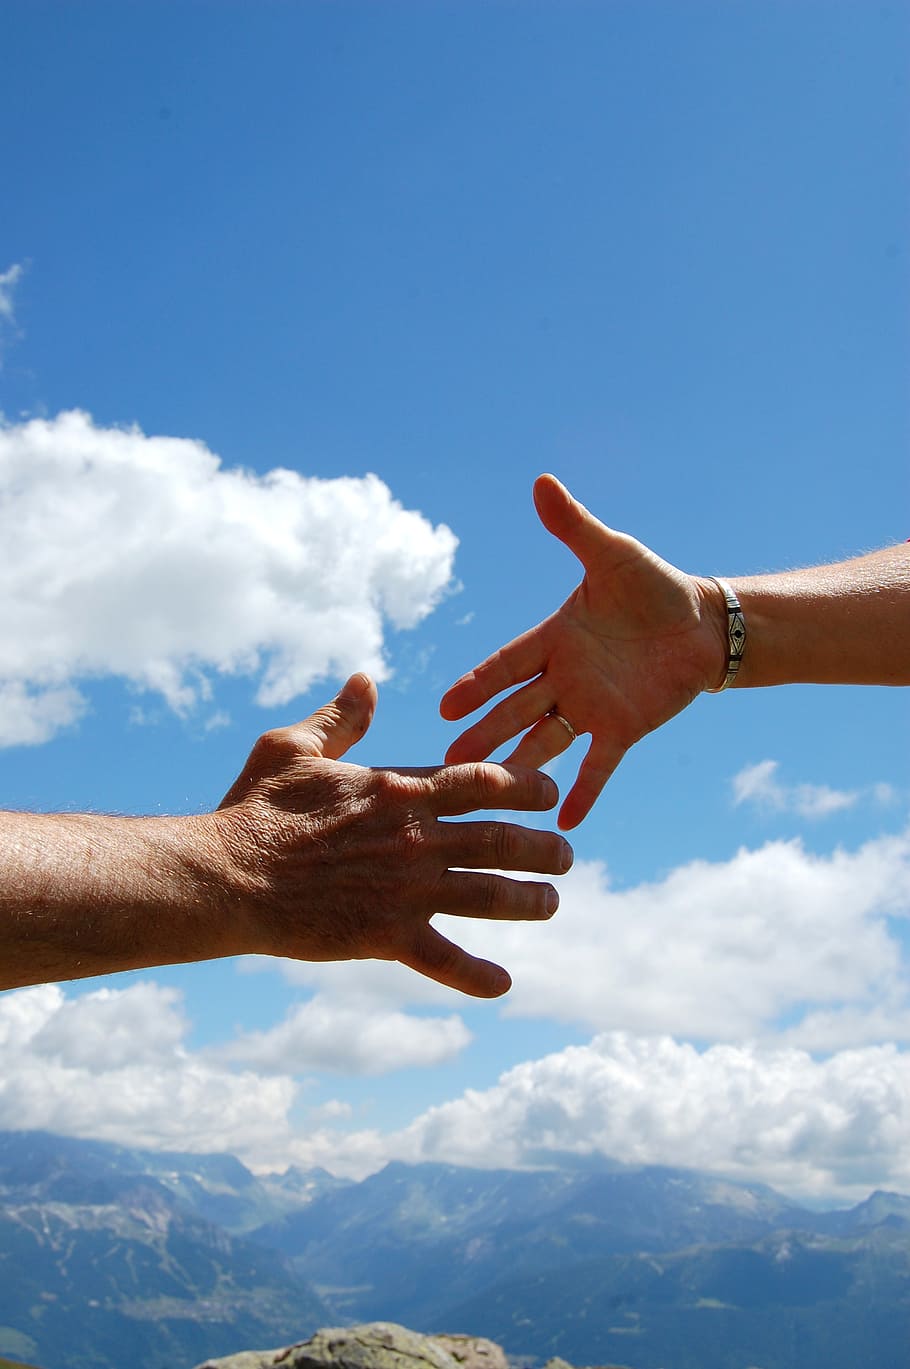 two, hands, reaching, solidarity, sky, handshake, man woman, clouds, blue, optimism